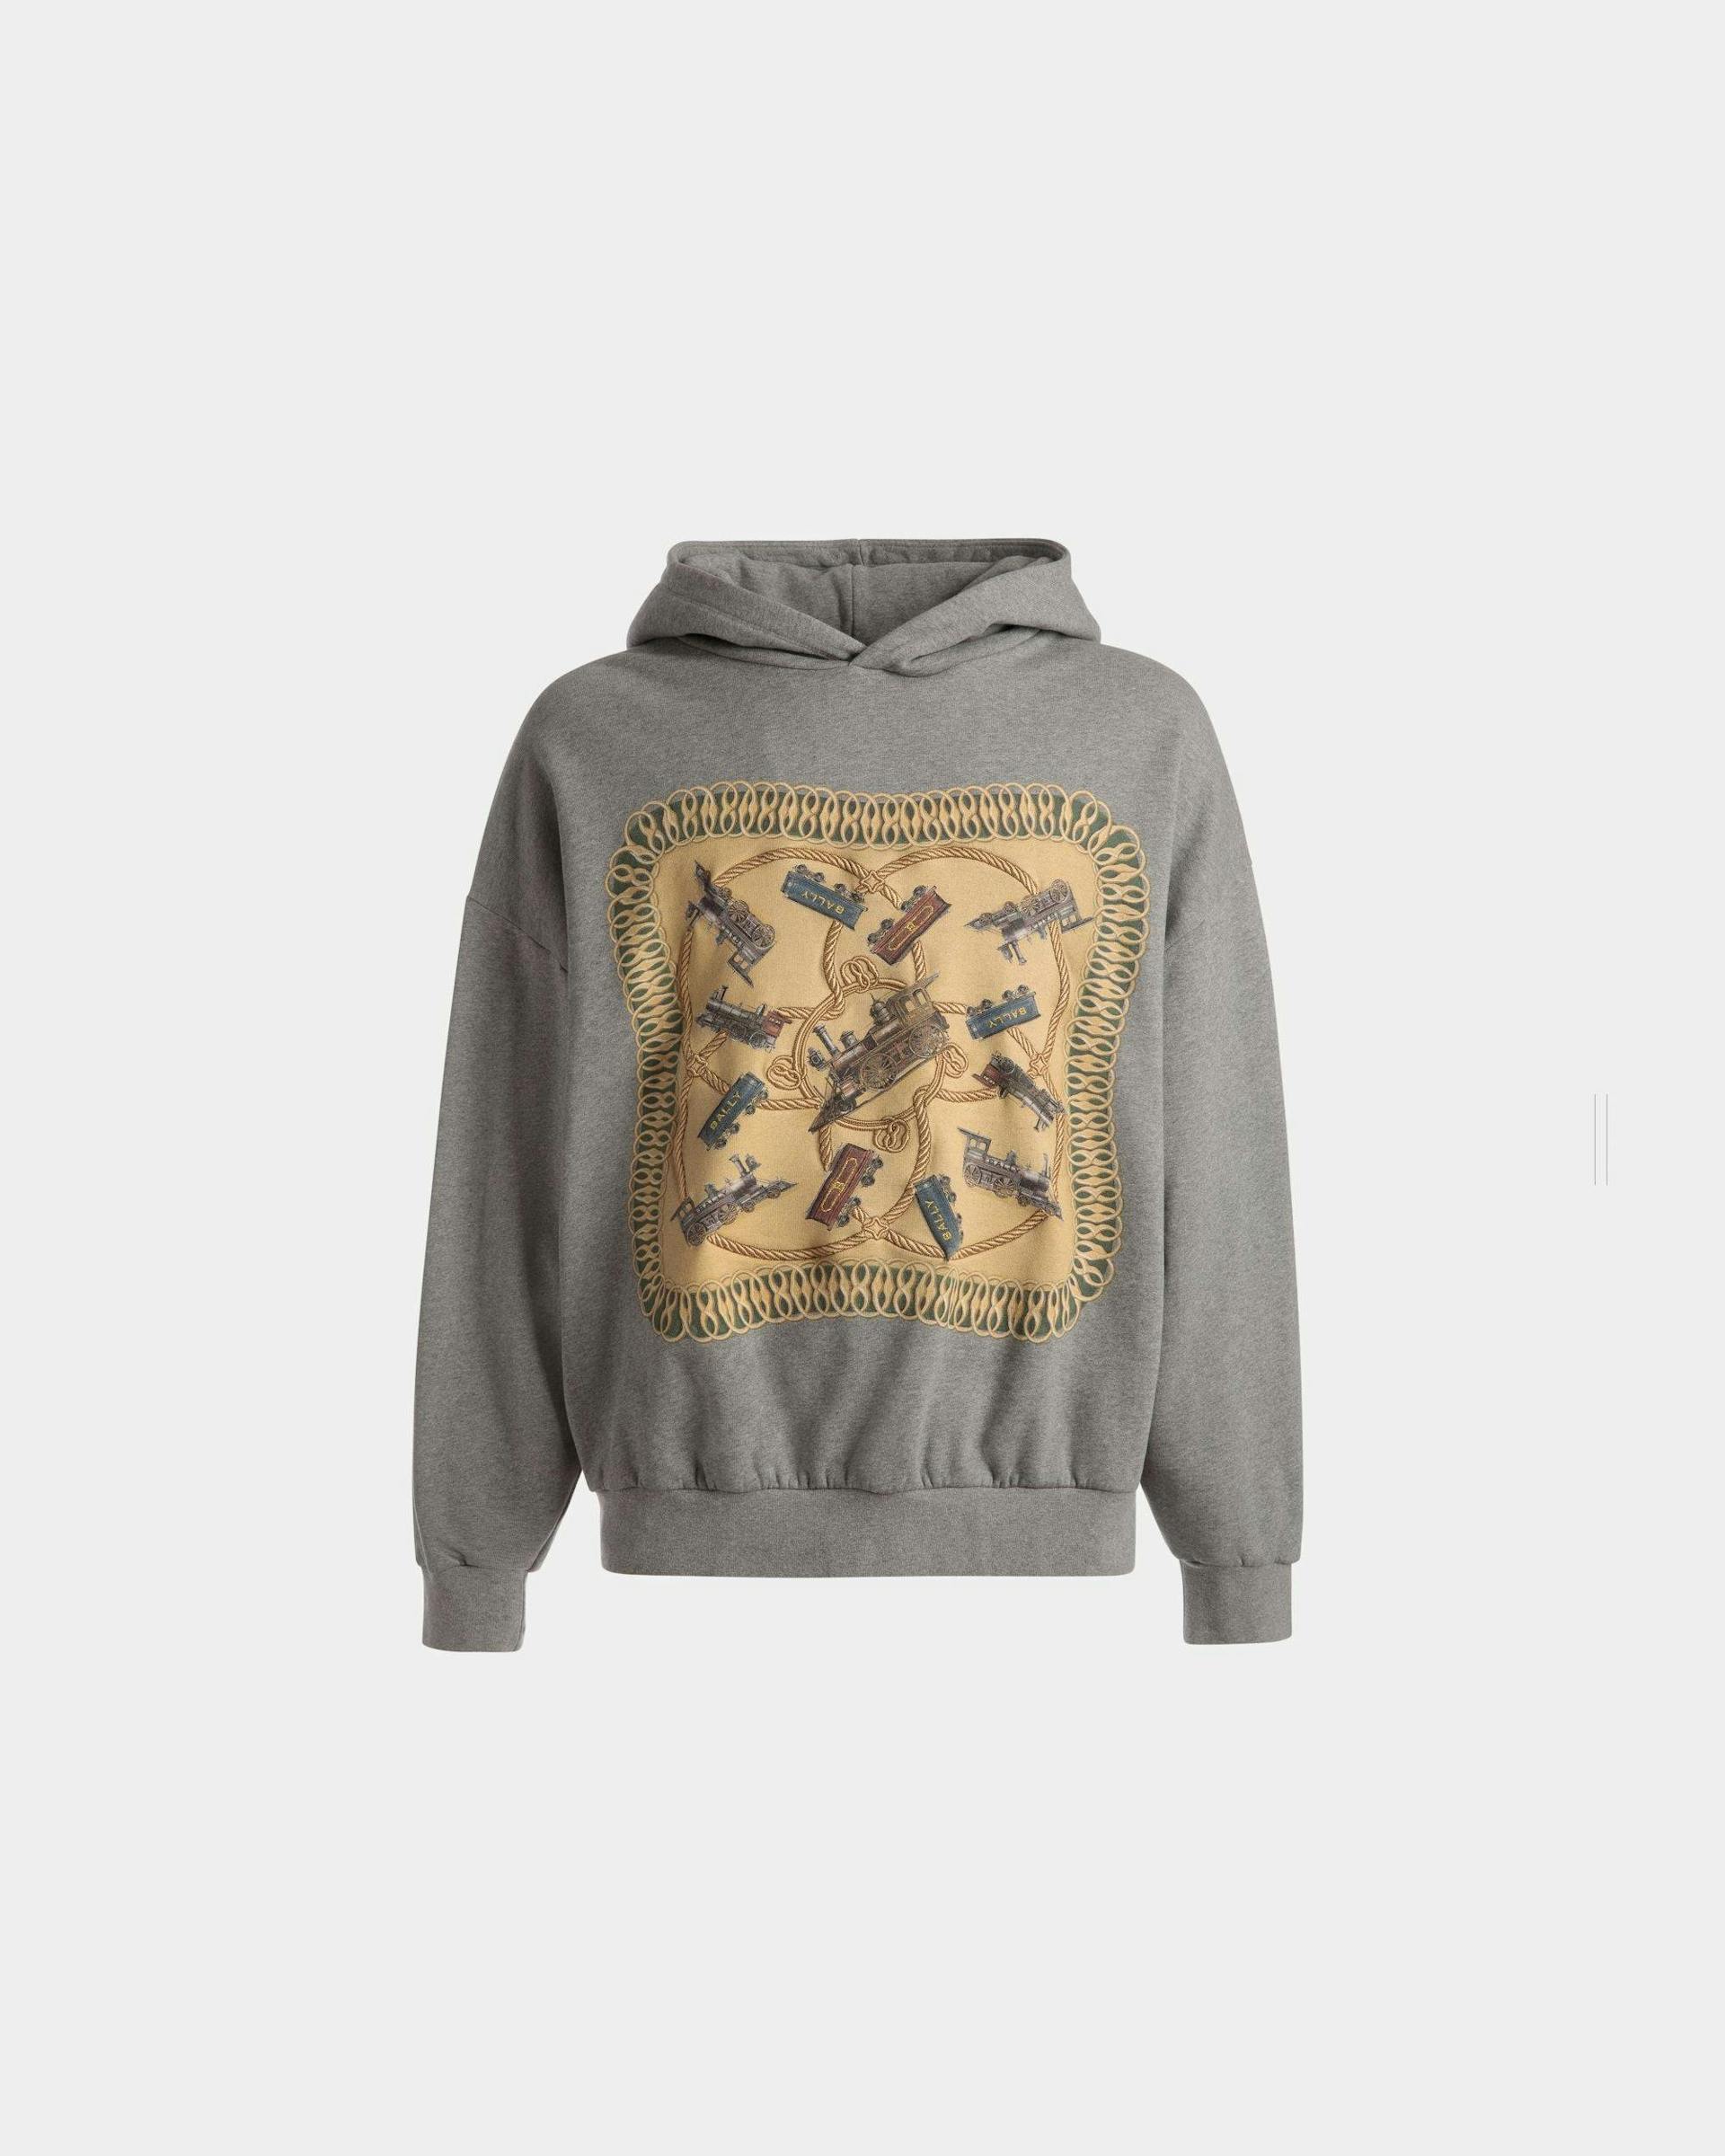 Train Print Hooded Sweatshirt | Men's Sweatshirt | Gray Melange Cotton ...